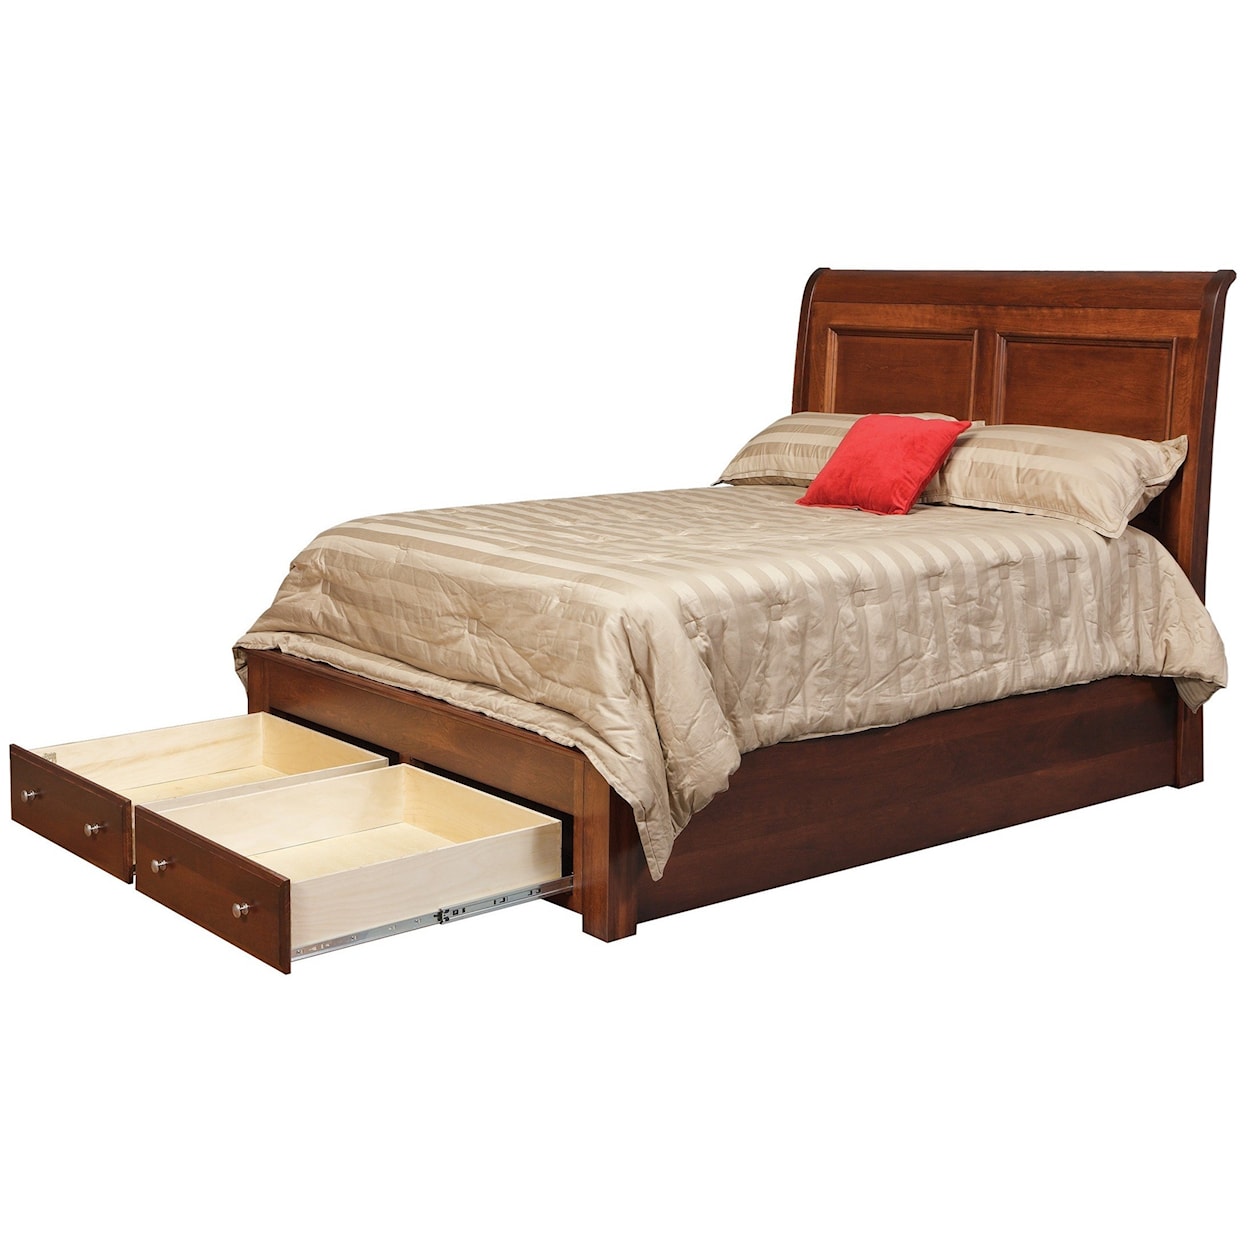 Daniel's Amish Classic Queen-Size Pedestal Footboard Bed